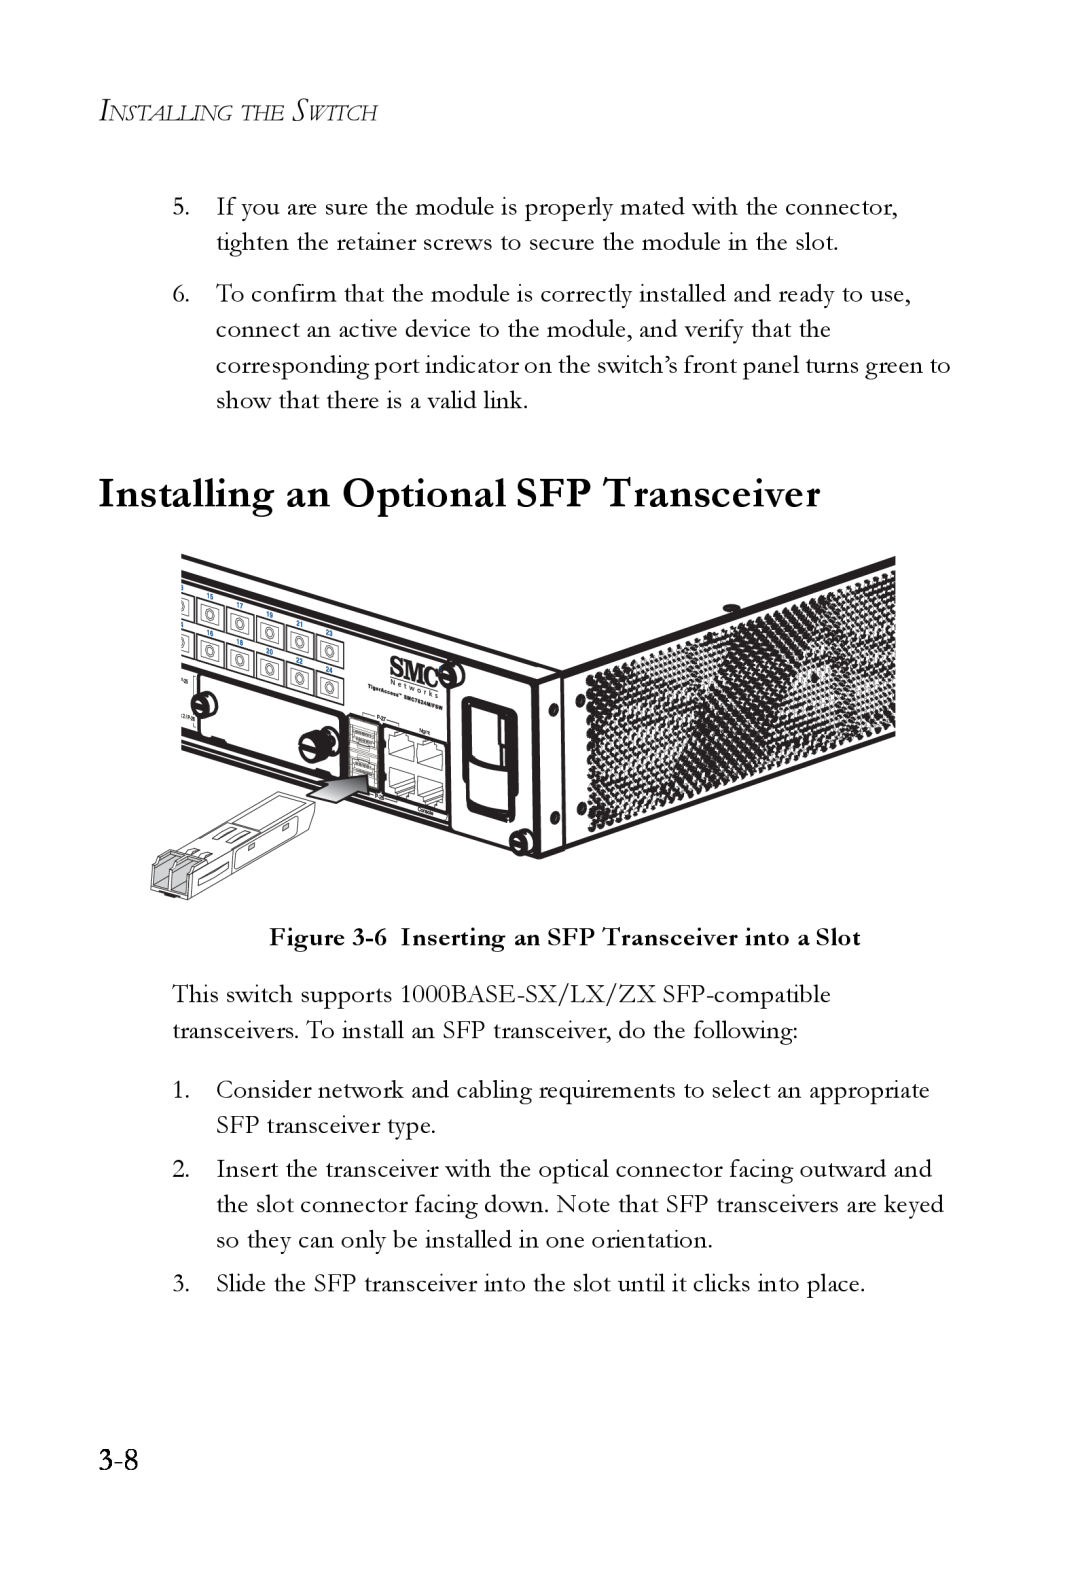 SMC Networks SMC7824M/FSW manual Installing an Optional SFP Transceiver, 6 Inserting an SFP Transceiver into a Slot 